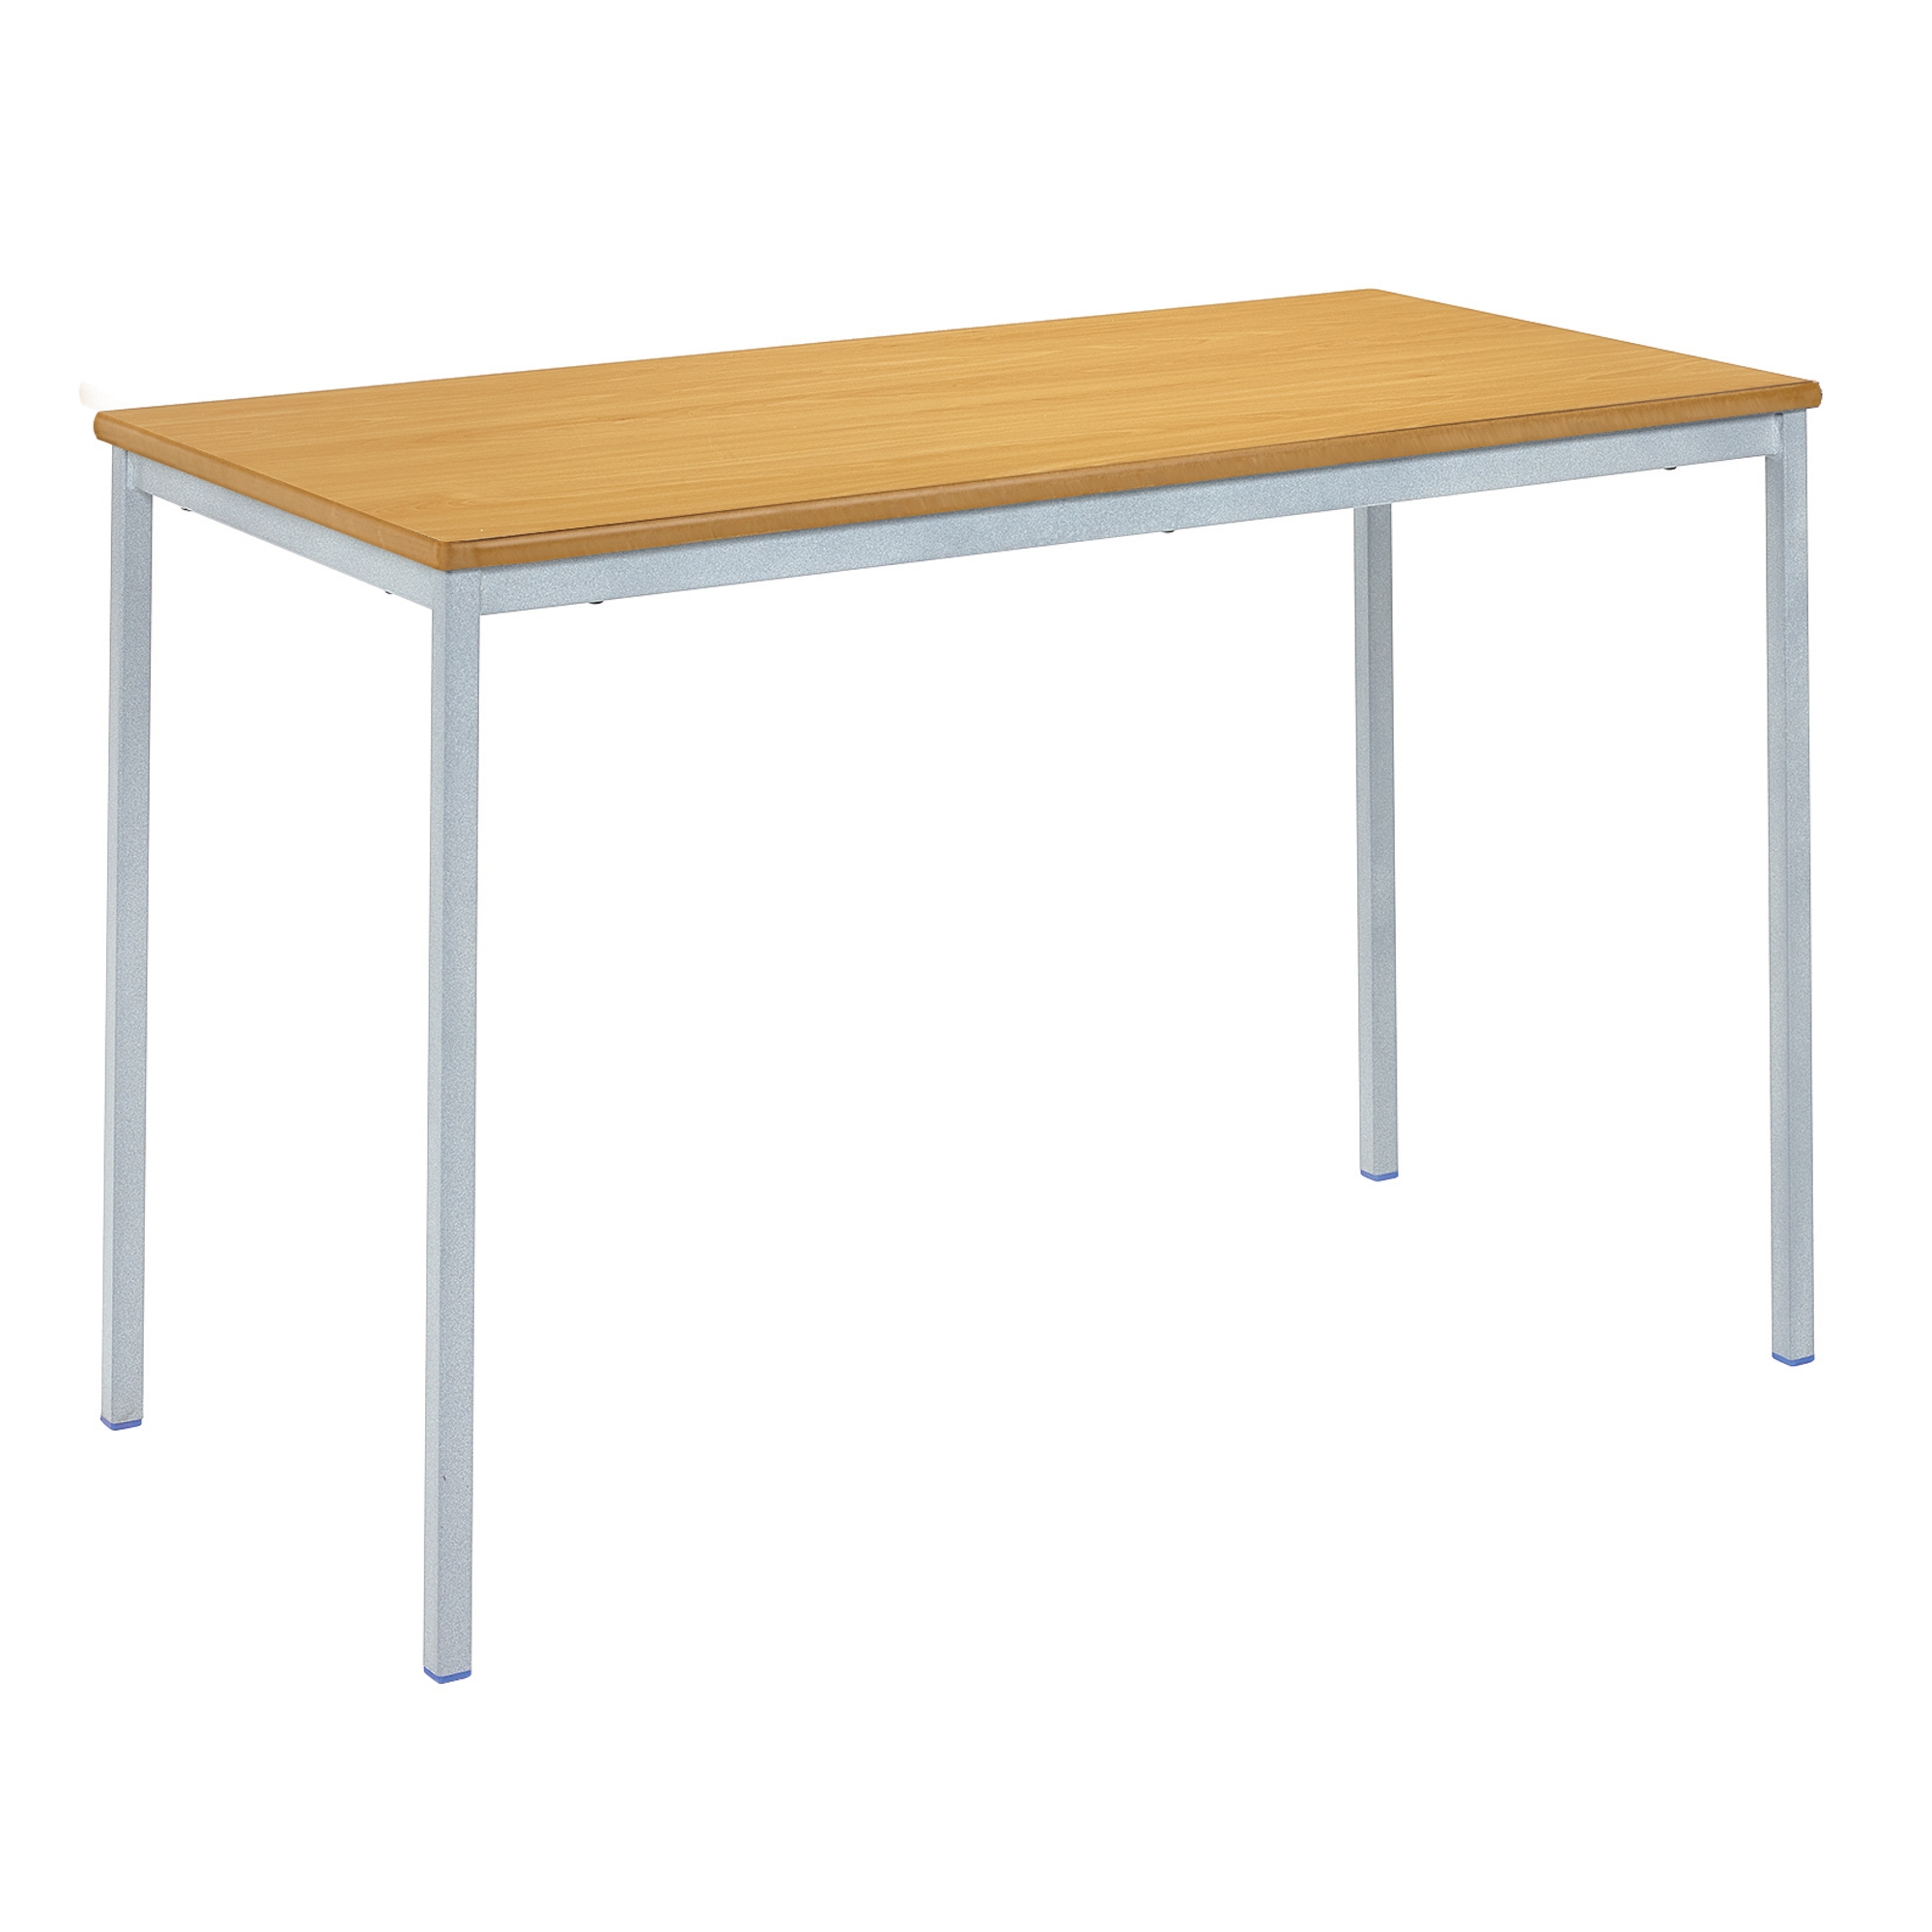 Classmates Rectangular Fully Welded Classroom Table - 1100 x 550 x 460mm - Beech